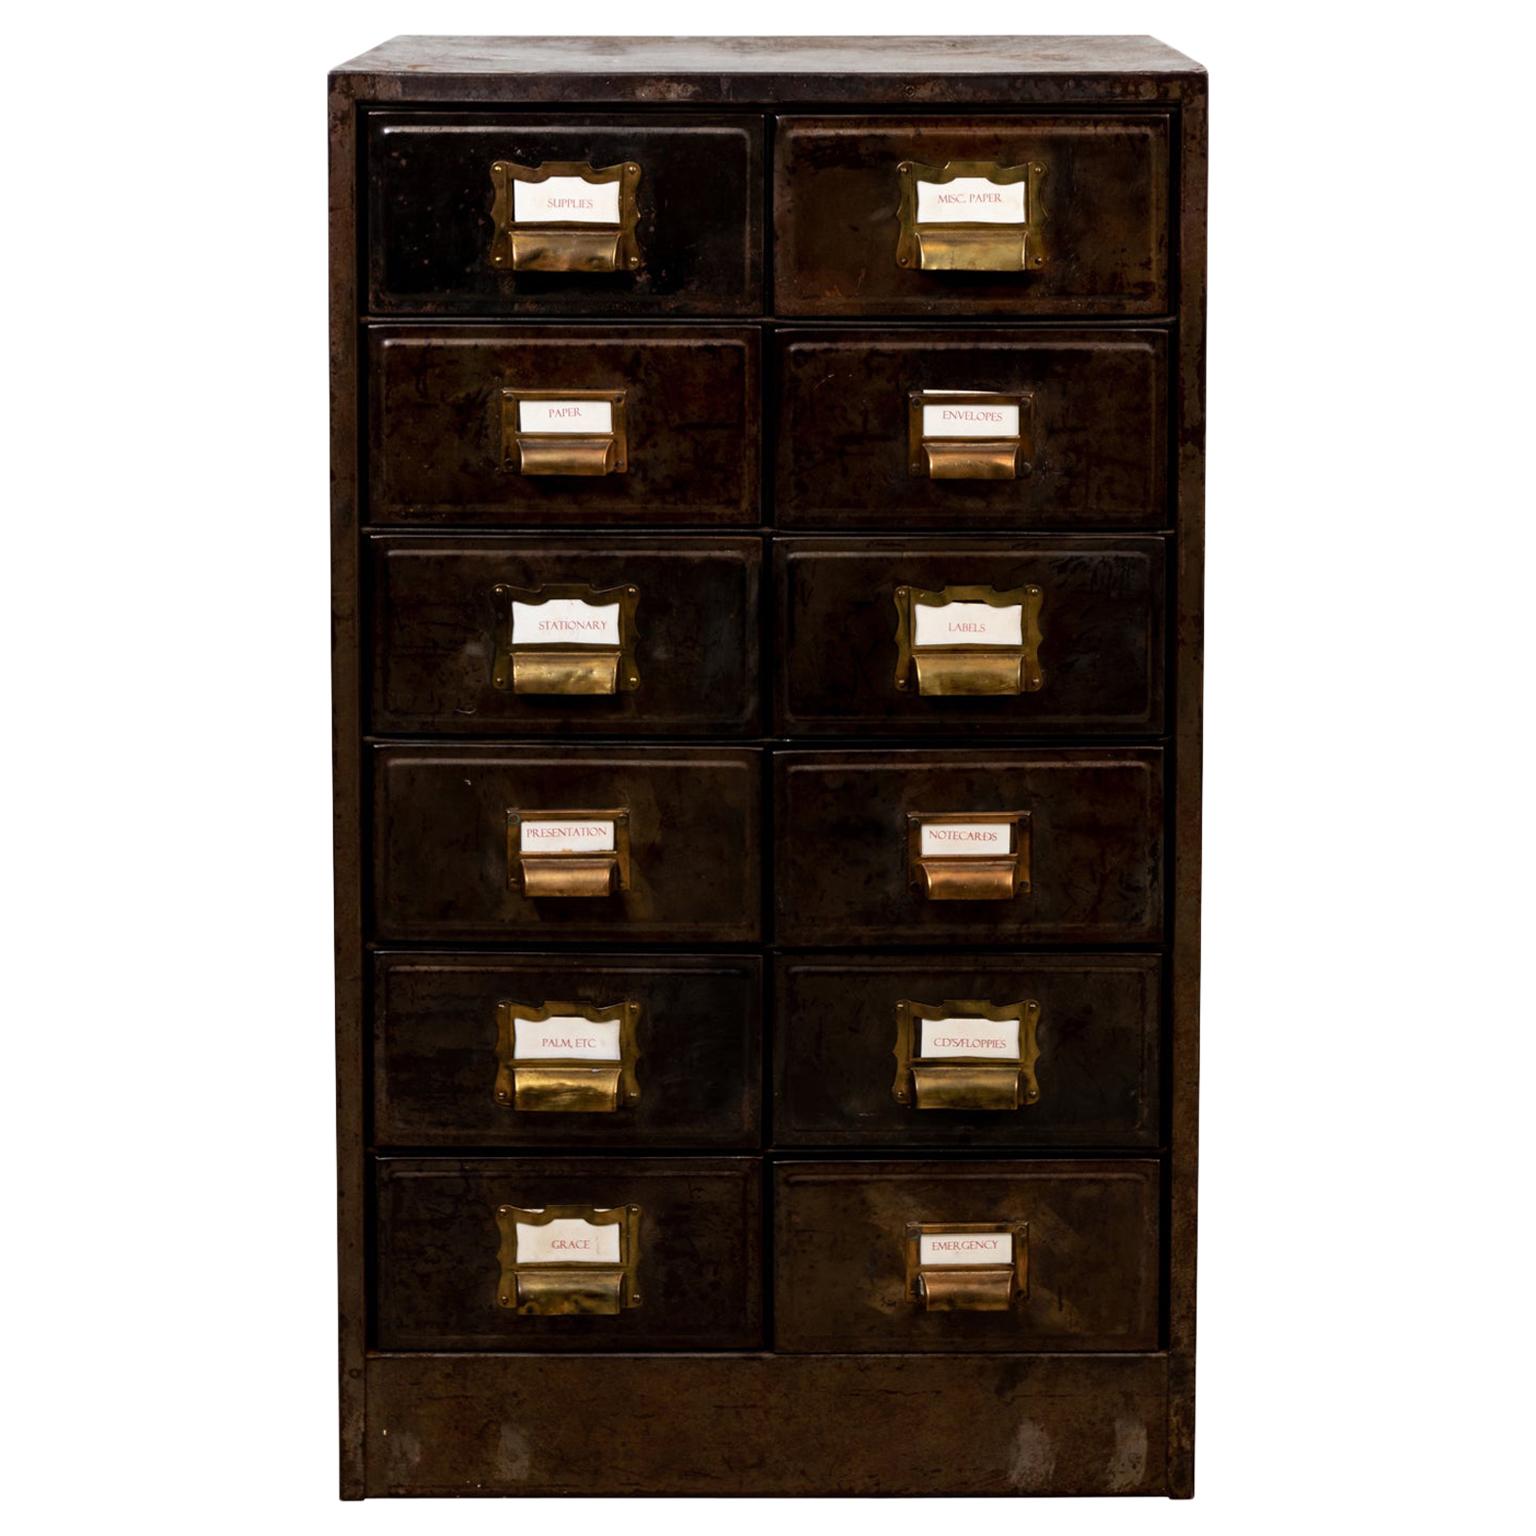 Antique Steel File Cabinet